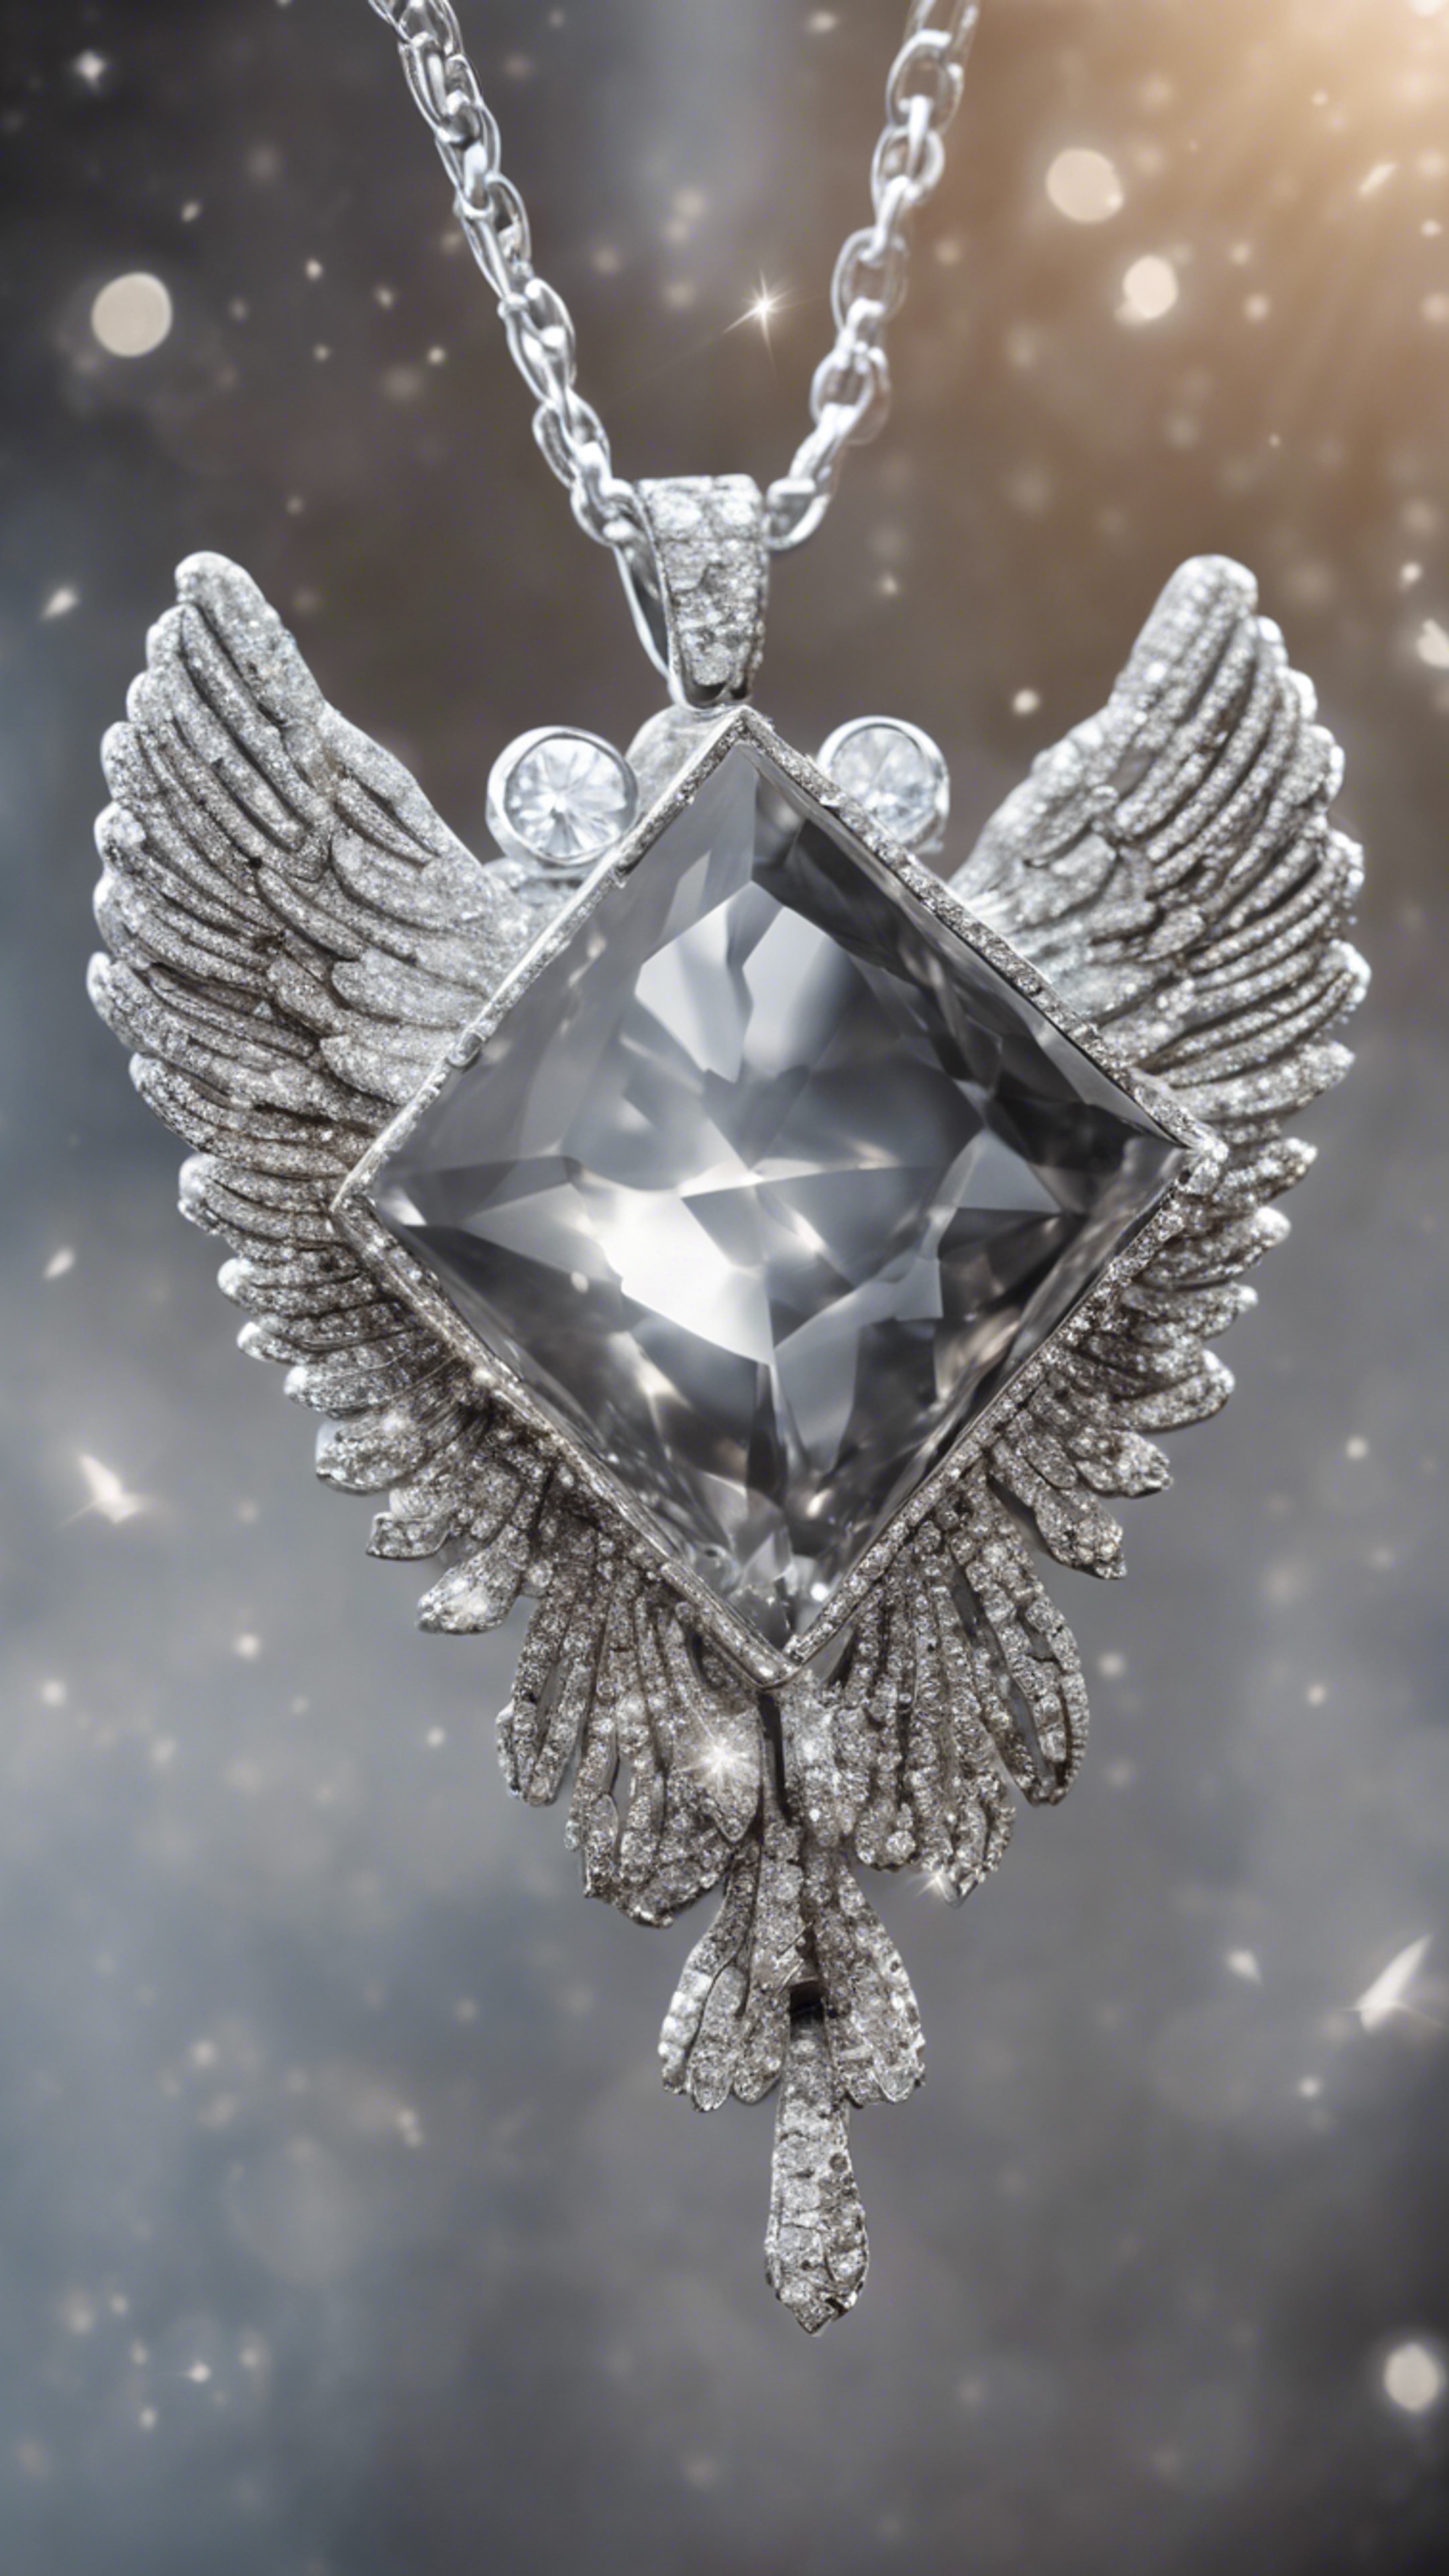 A gray diamond wrapped in the wings of a silver angel pendant. Wallpaper[ad1b9e387c144e34b8b5]